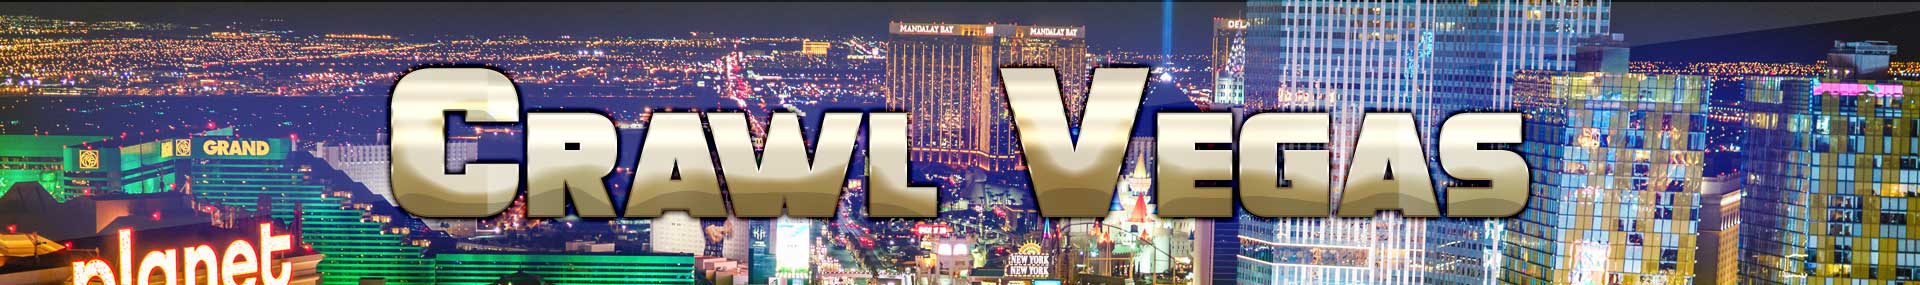 Crawl Vegas - Las Vegas Club Tours